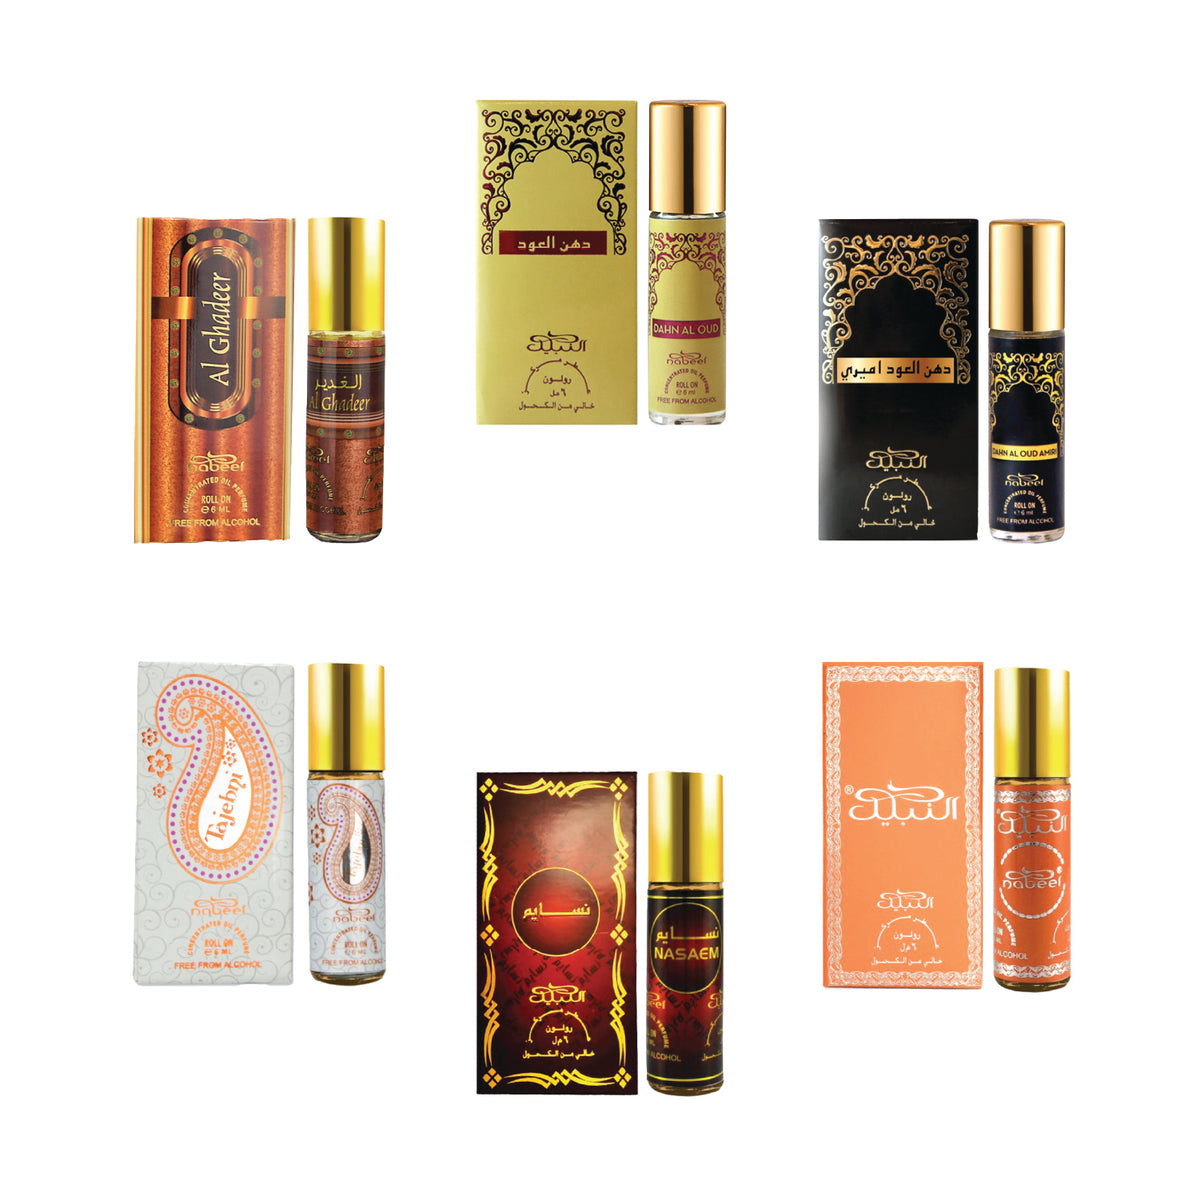 Nabeel - Premium Attar Roll-on Perfume Oil - Collection 1 - Al Ghadeer, Dahn Al Oud, Dahn Al Oud Amiri, Tajebni, Nasaem, Nabeel | 100% Non Alcoholic | Gift Set - 6ml (Pack of 6) | Made in U.A.E